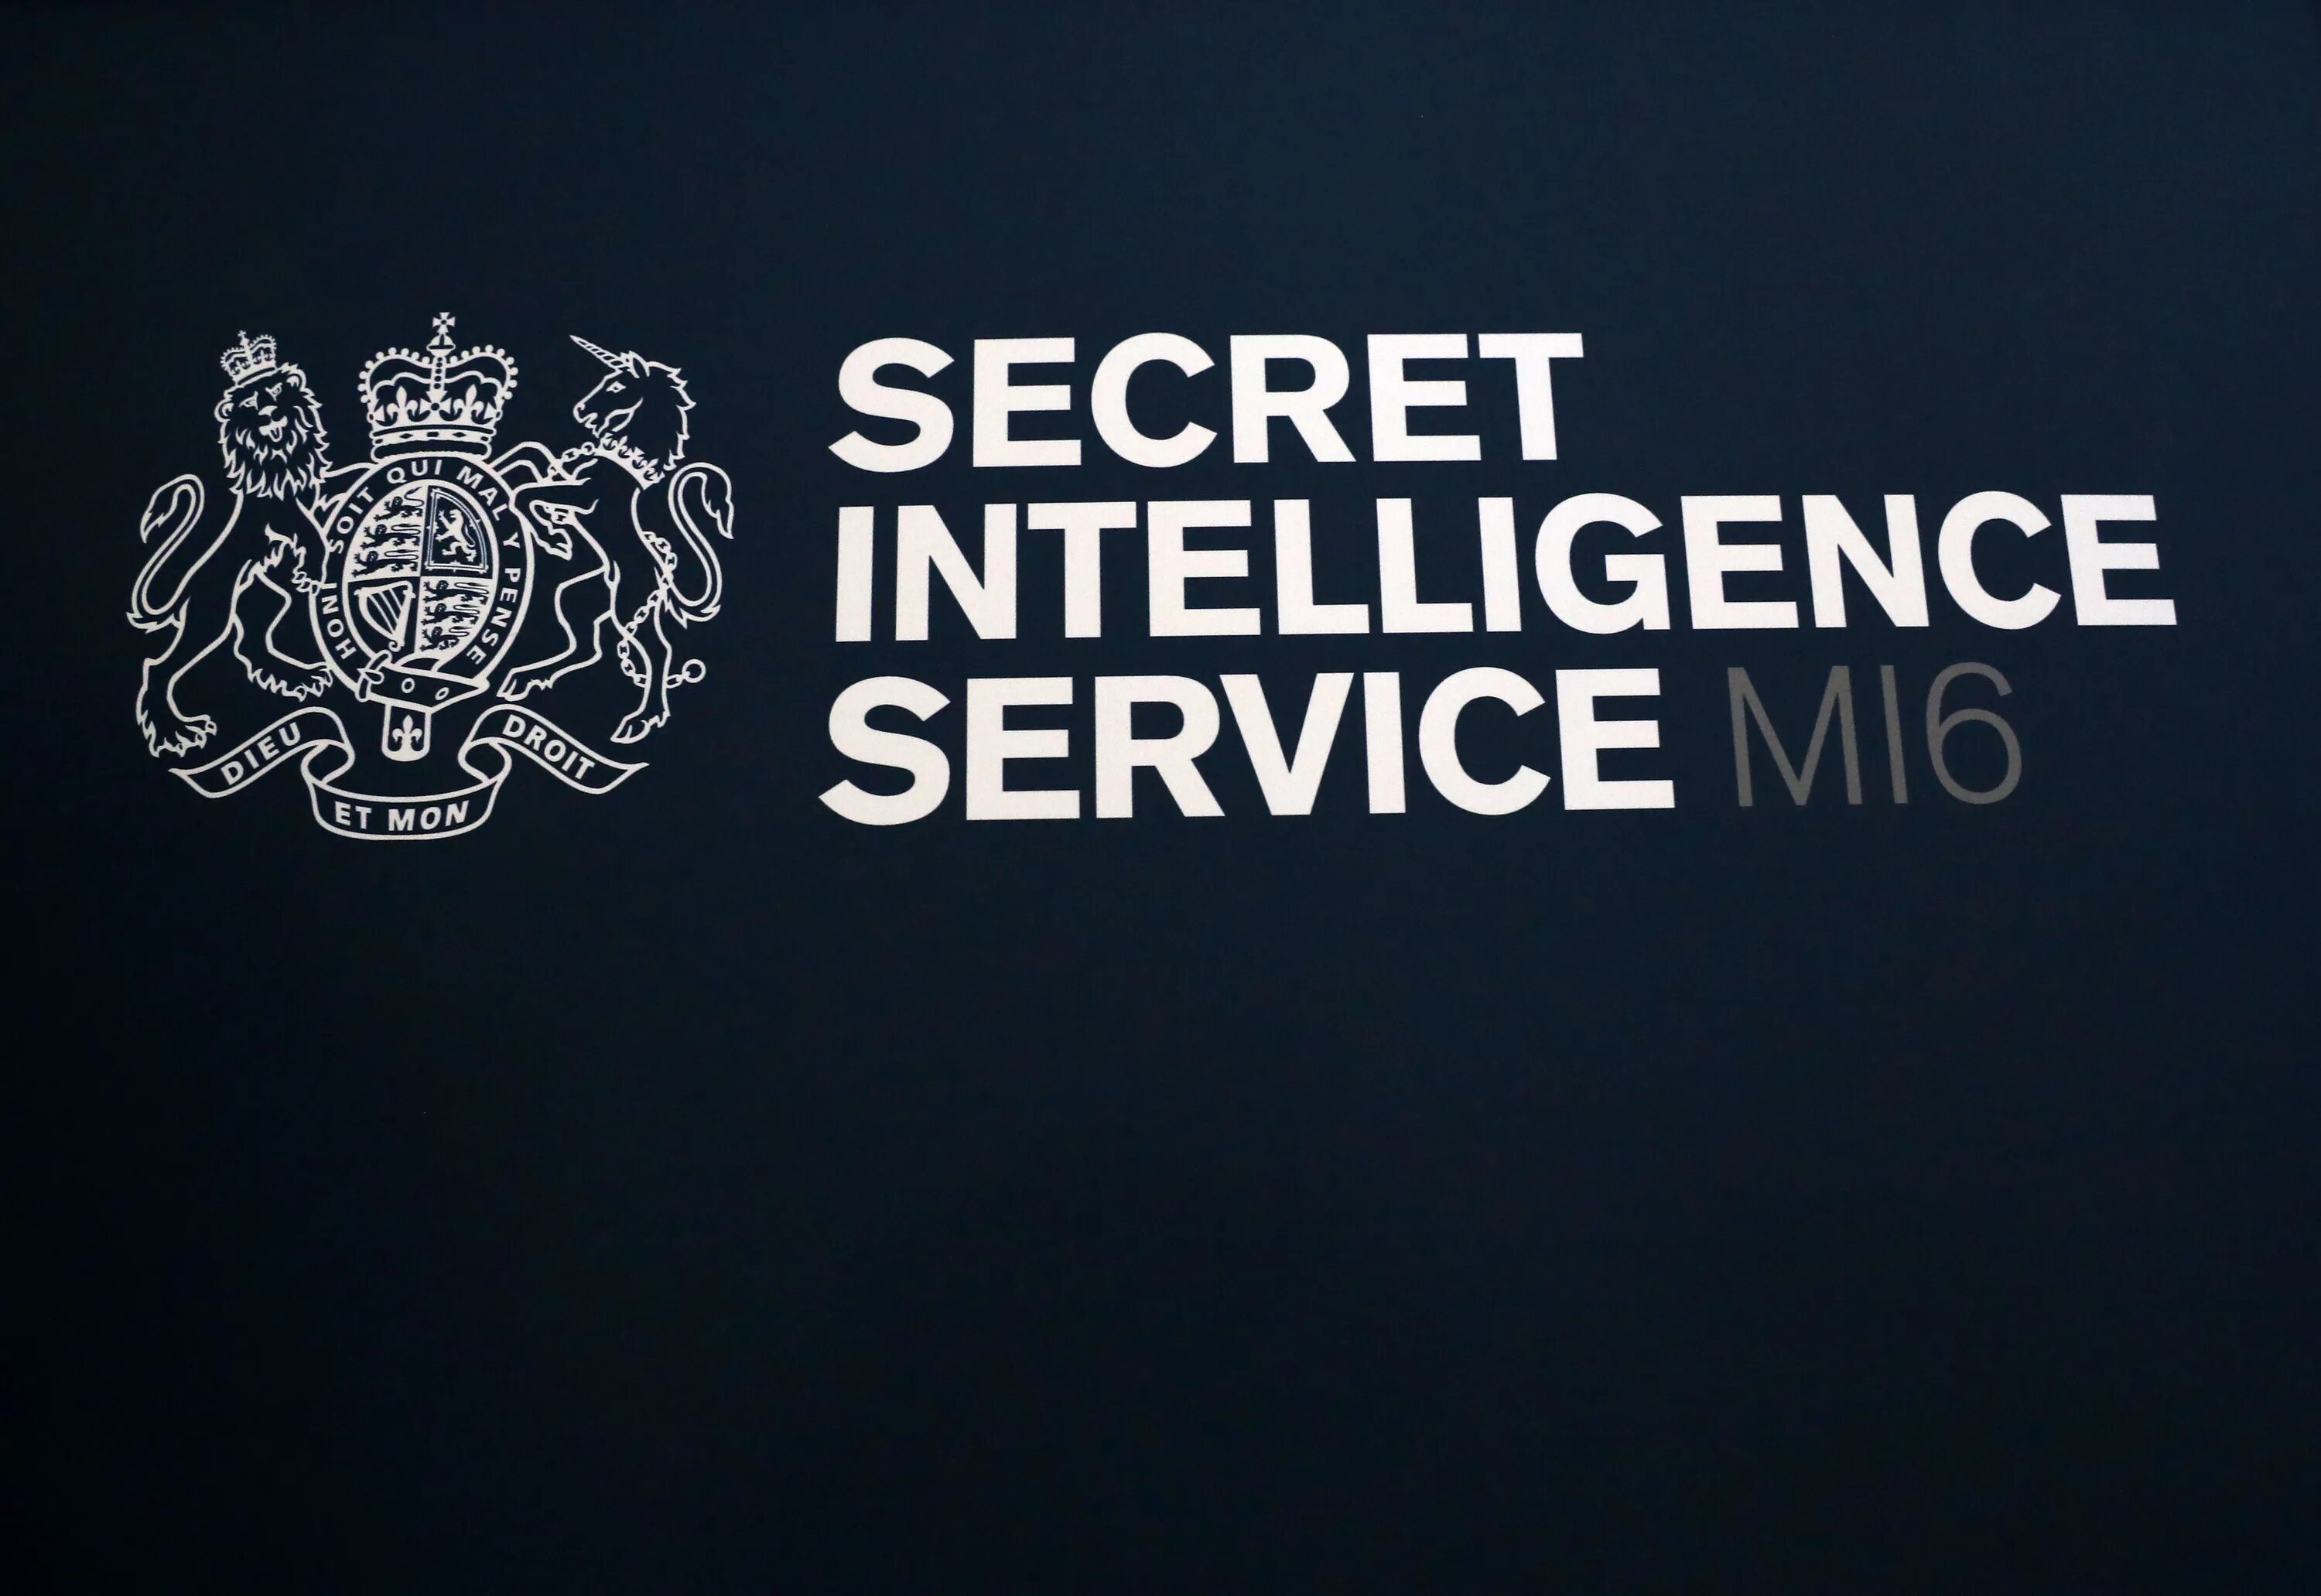 Ми 6 спецслужба. Ми6 Британская разведка. Секретная разведка Великобритании ми-6. Секретная разведывательная служба ми-6. Эмблема mi6.